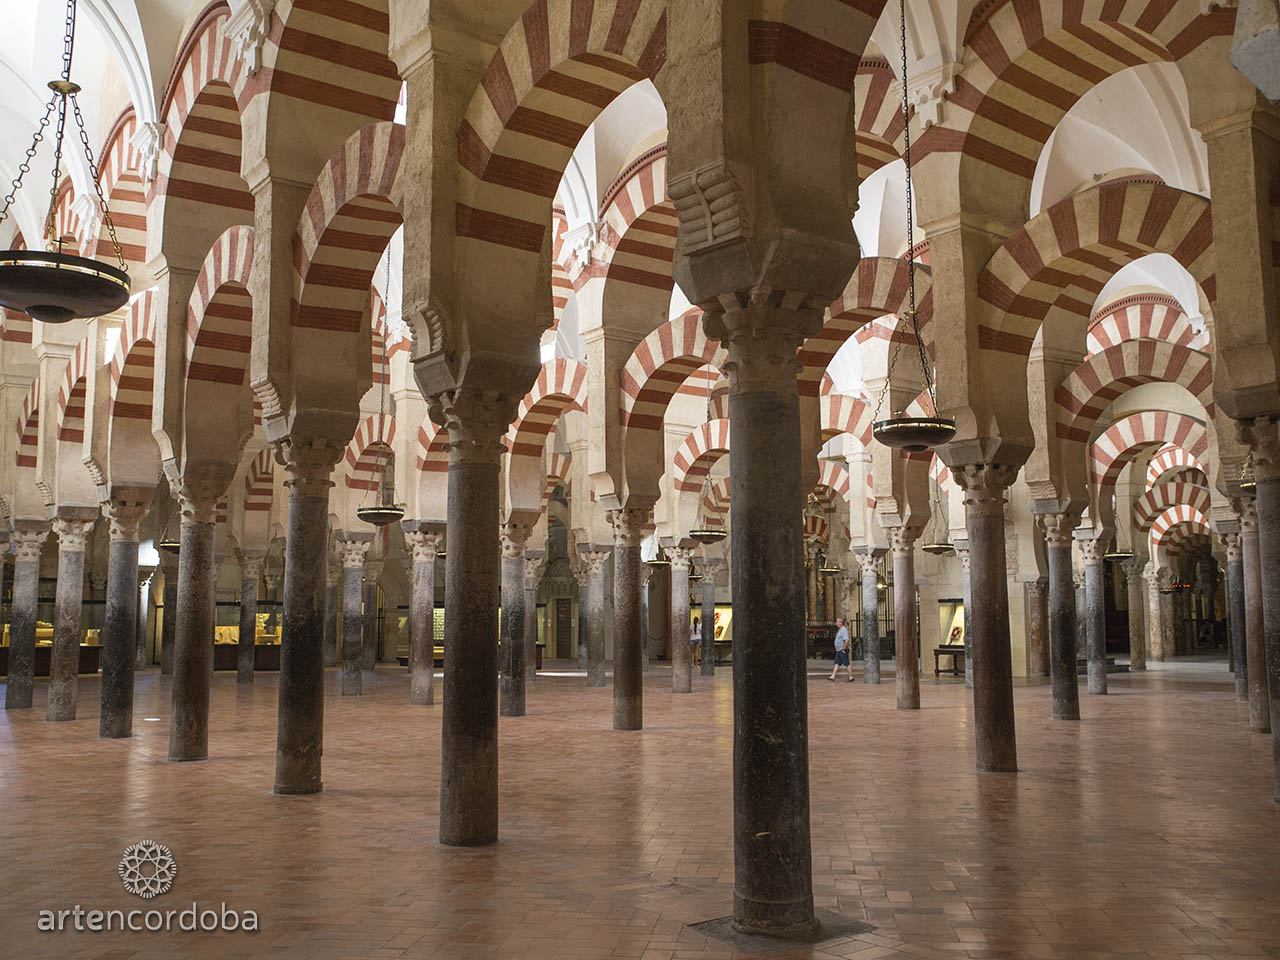 Bosque de columnas en el interior de la Mezquita-Catedral de Córdoba